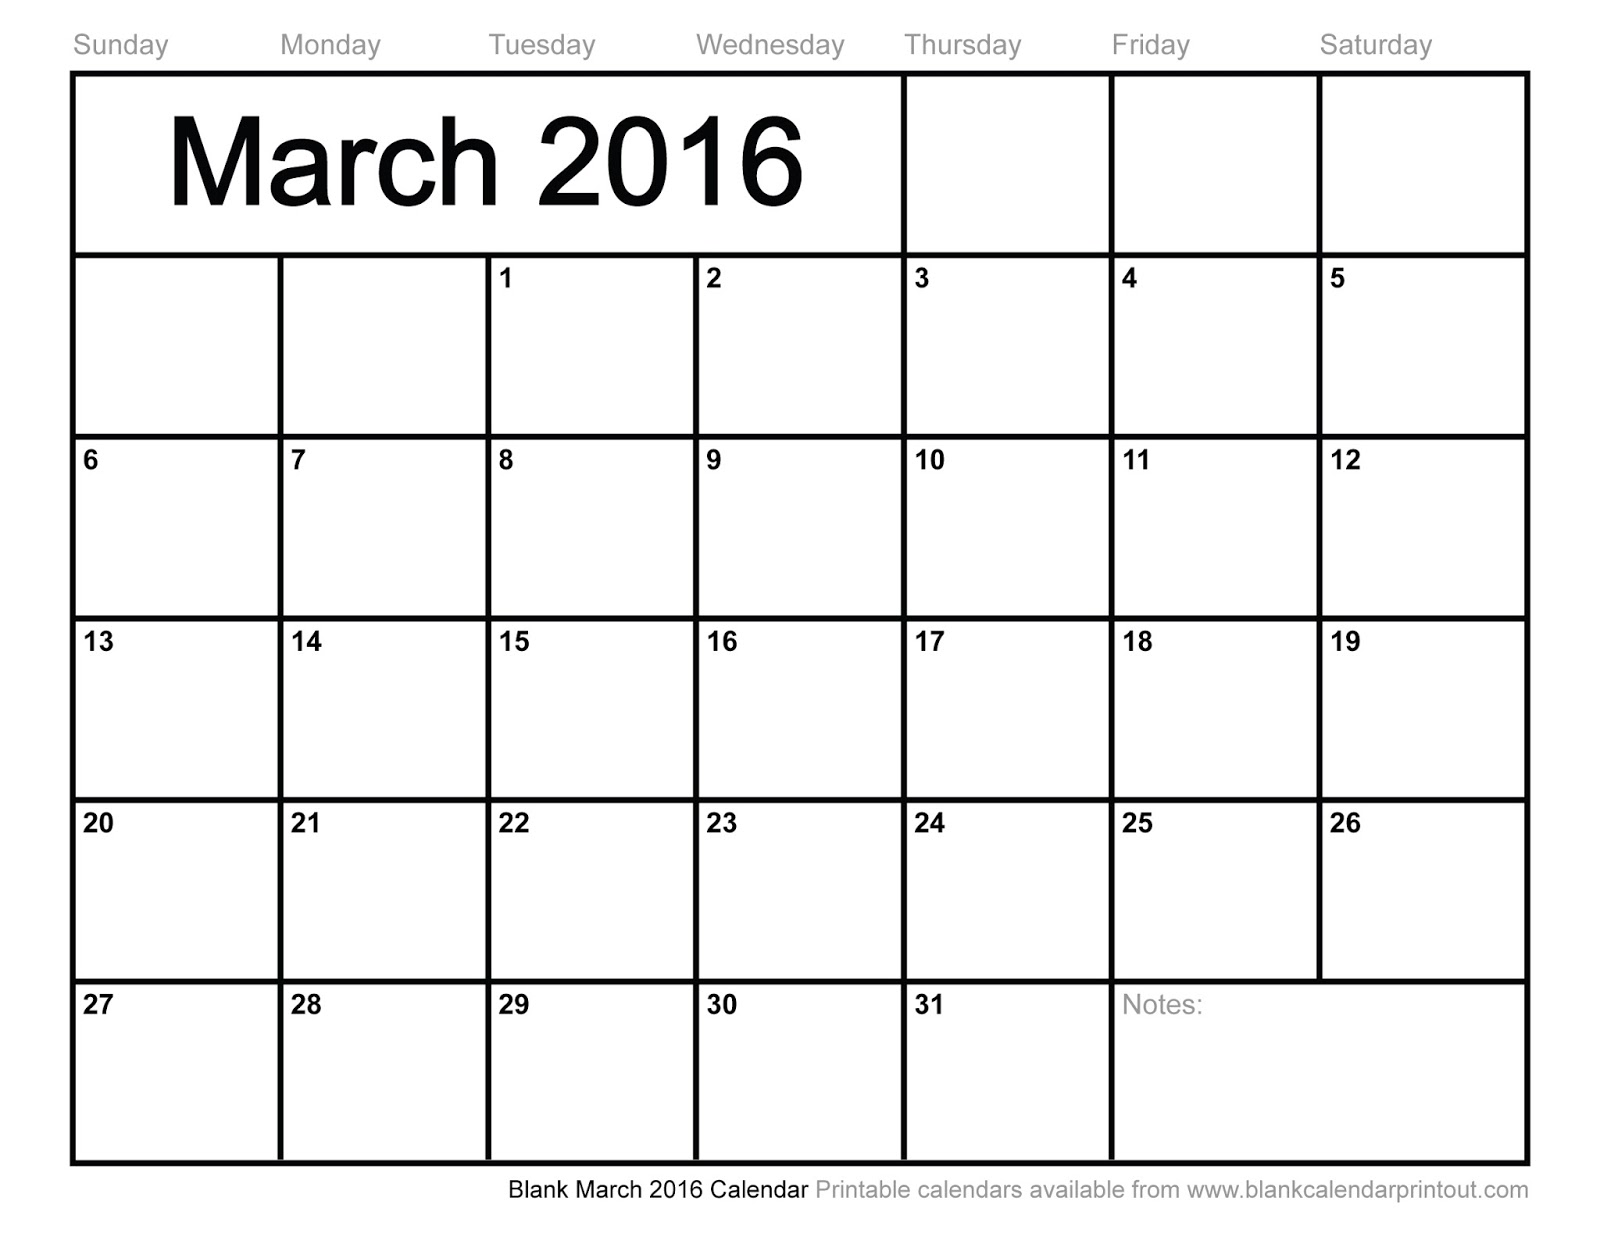 https://3.bp.blogspot.com/-EdaDRVRYbZg/Vs_B28U-KgI/AAAAAAAAACc/YrZhfPCKZnI/s1600/Calendar-for-March-2016.jpg